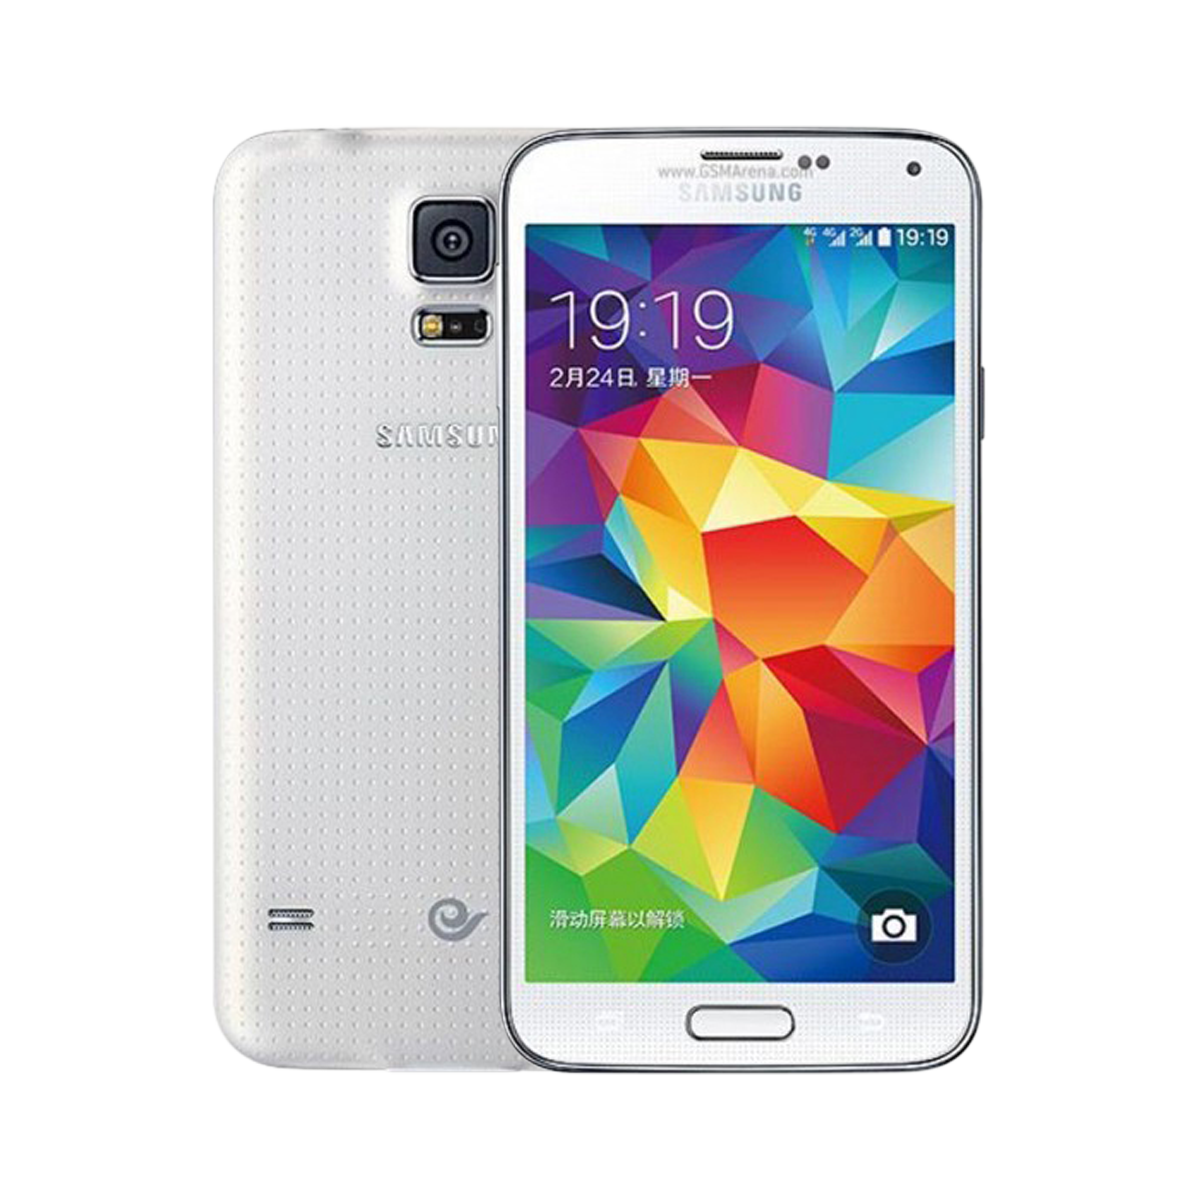 Buy Refurbished Samsung Galaxy S5